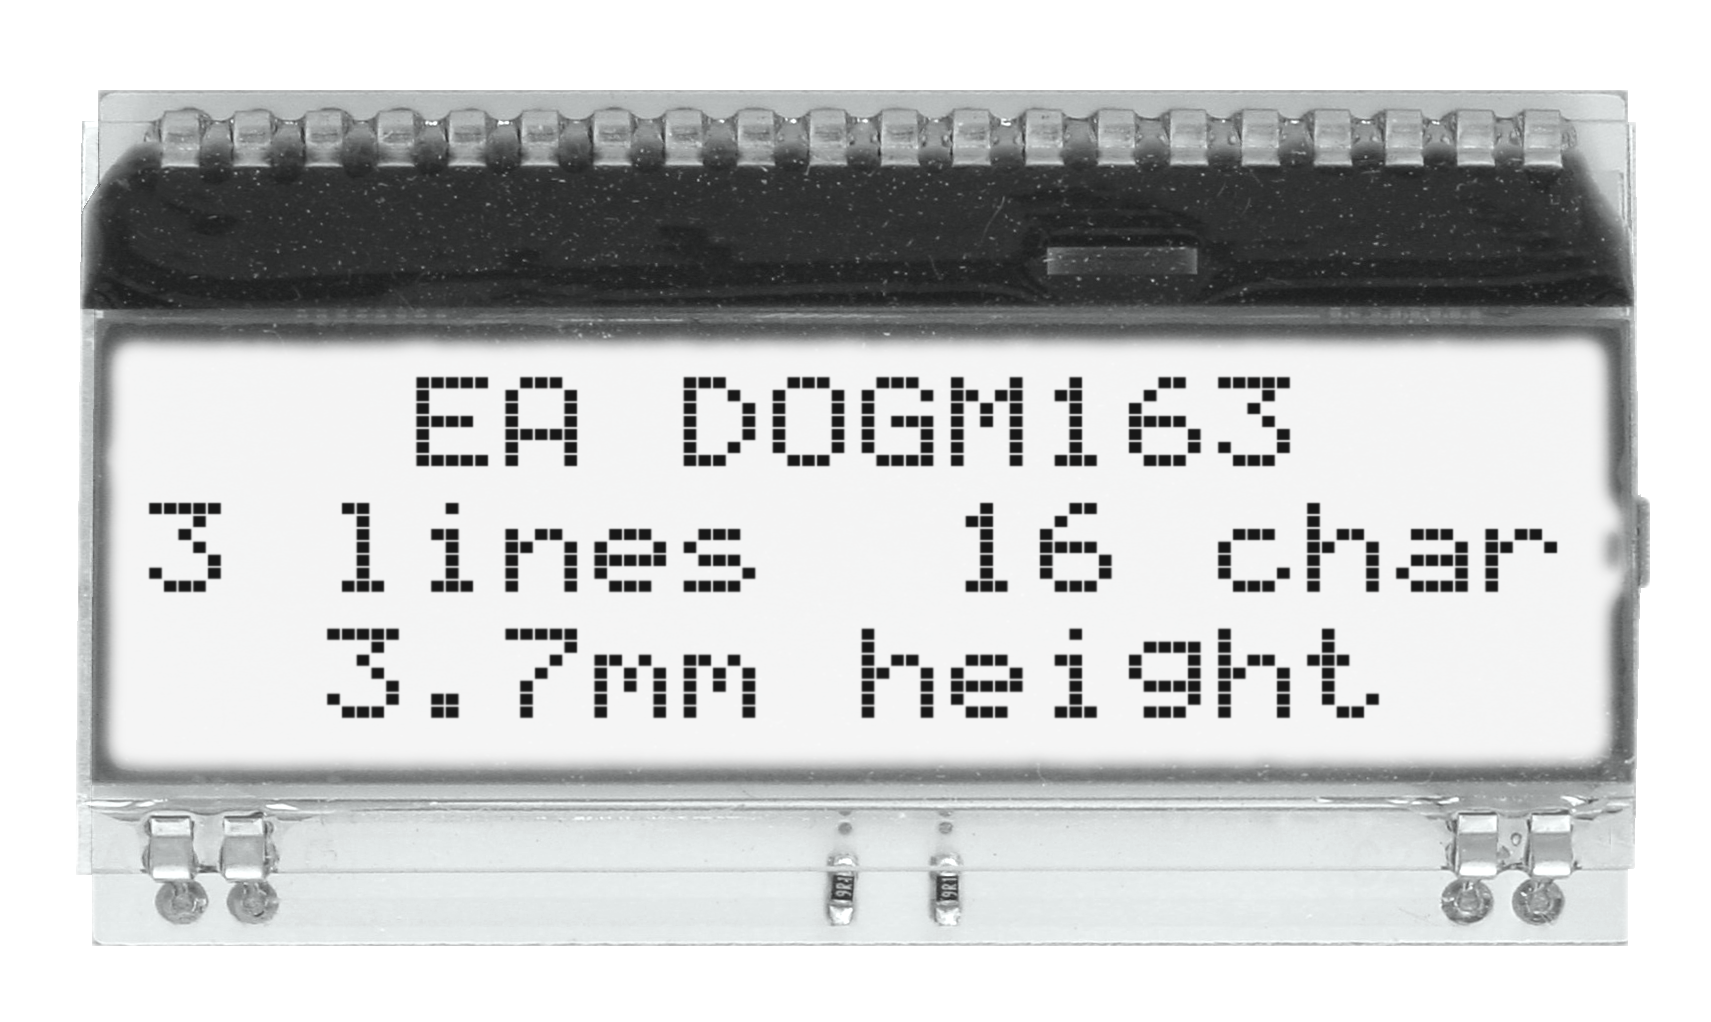 3x16 Character Display EA DOGM163W-A